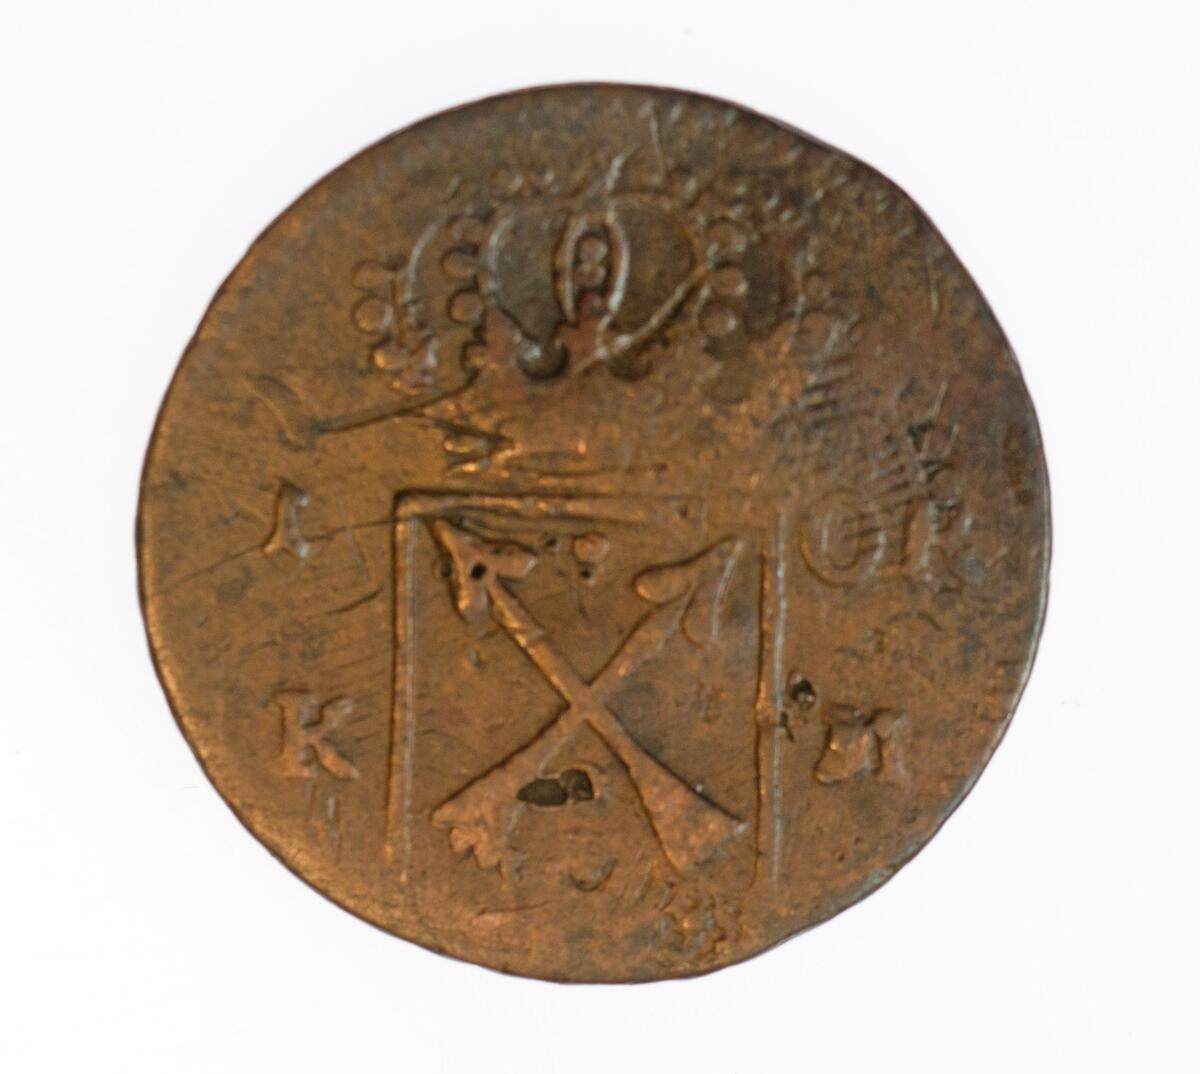 Mynt, 1 öre k.m. från Fredrik I tid, 1721.